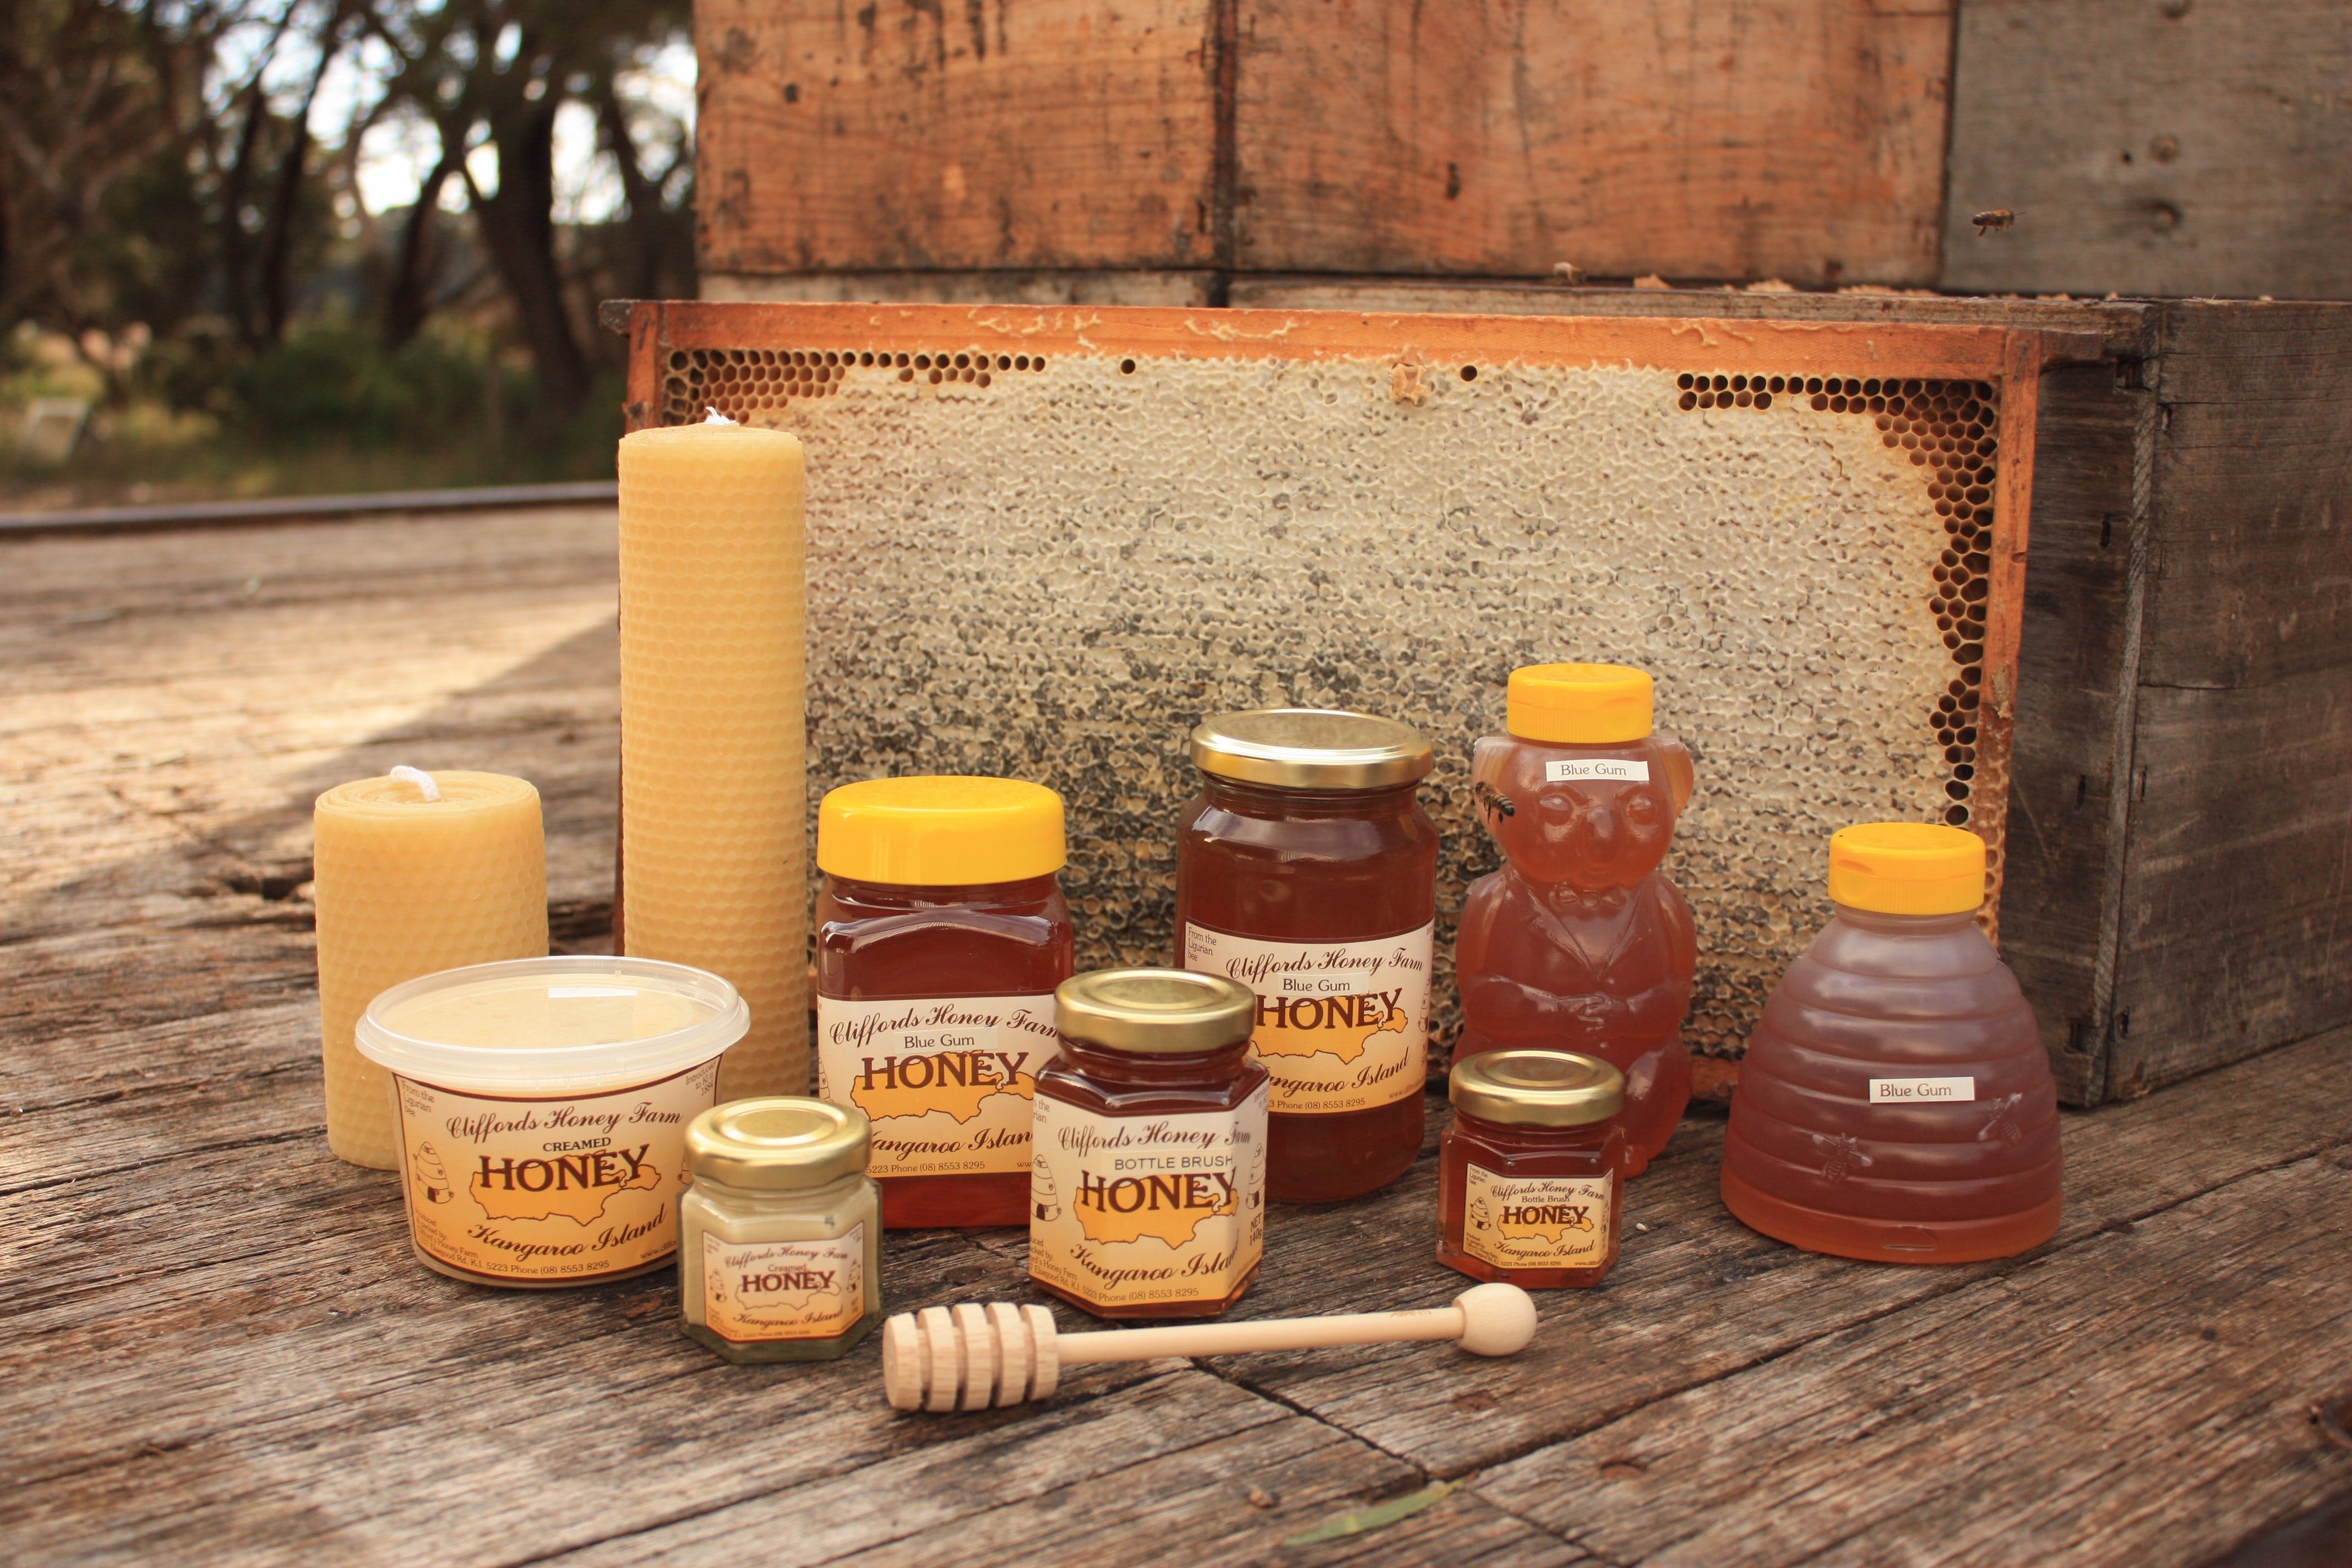 Clifford's Honey Farm